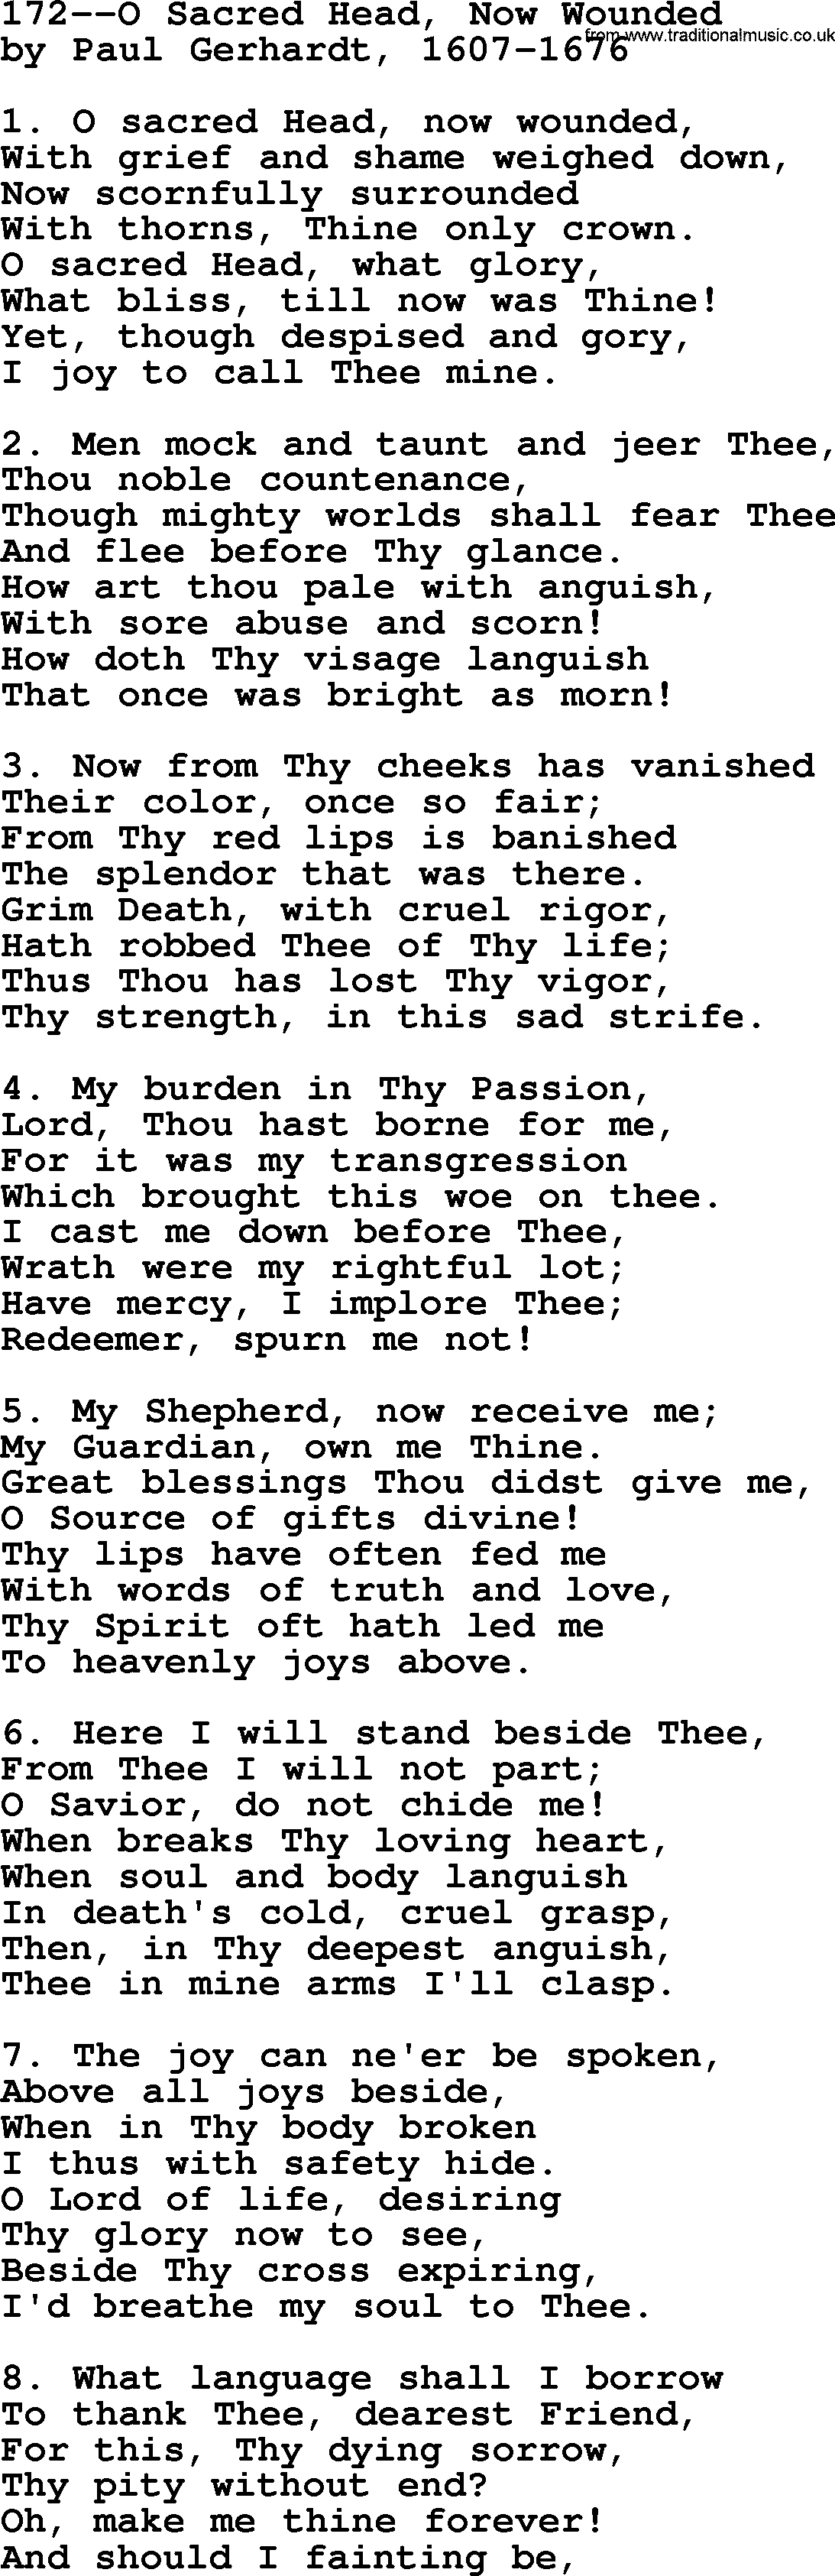 Lutheran Hymn: 172--O Sacred Head, Now Wounded.txt lyrics with PDF